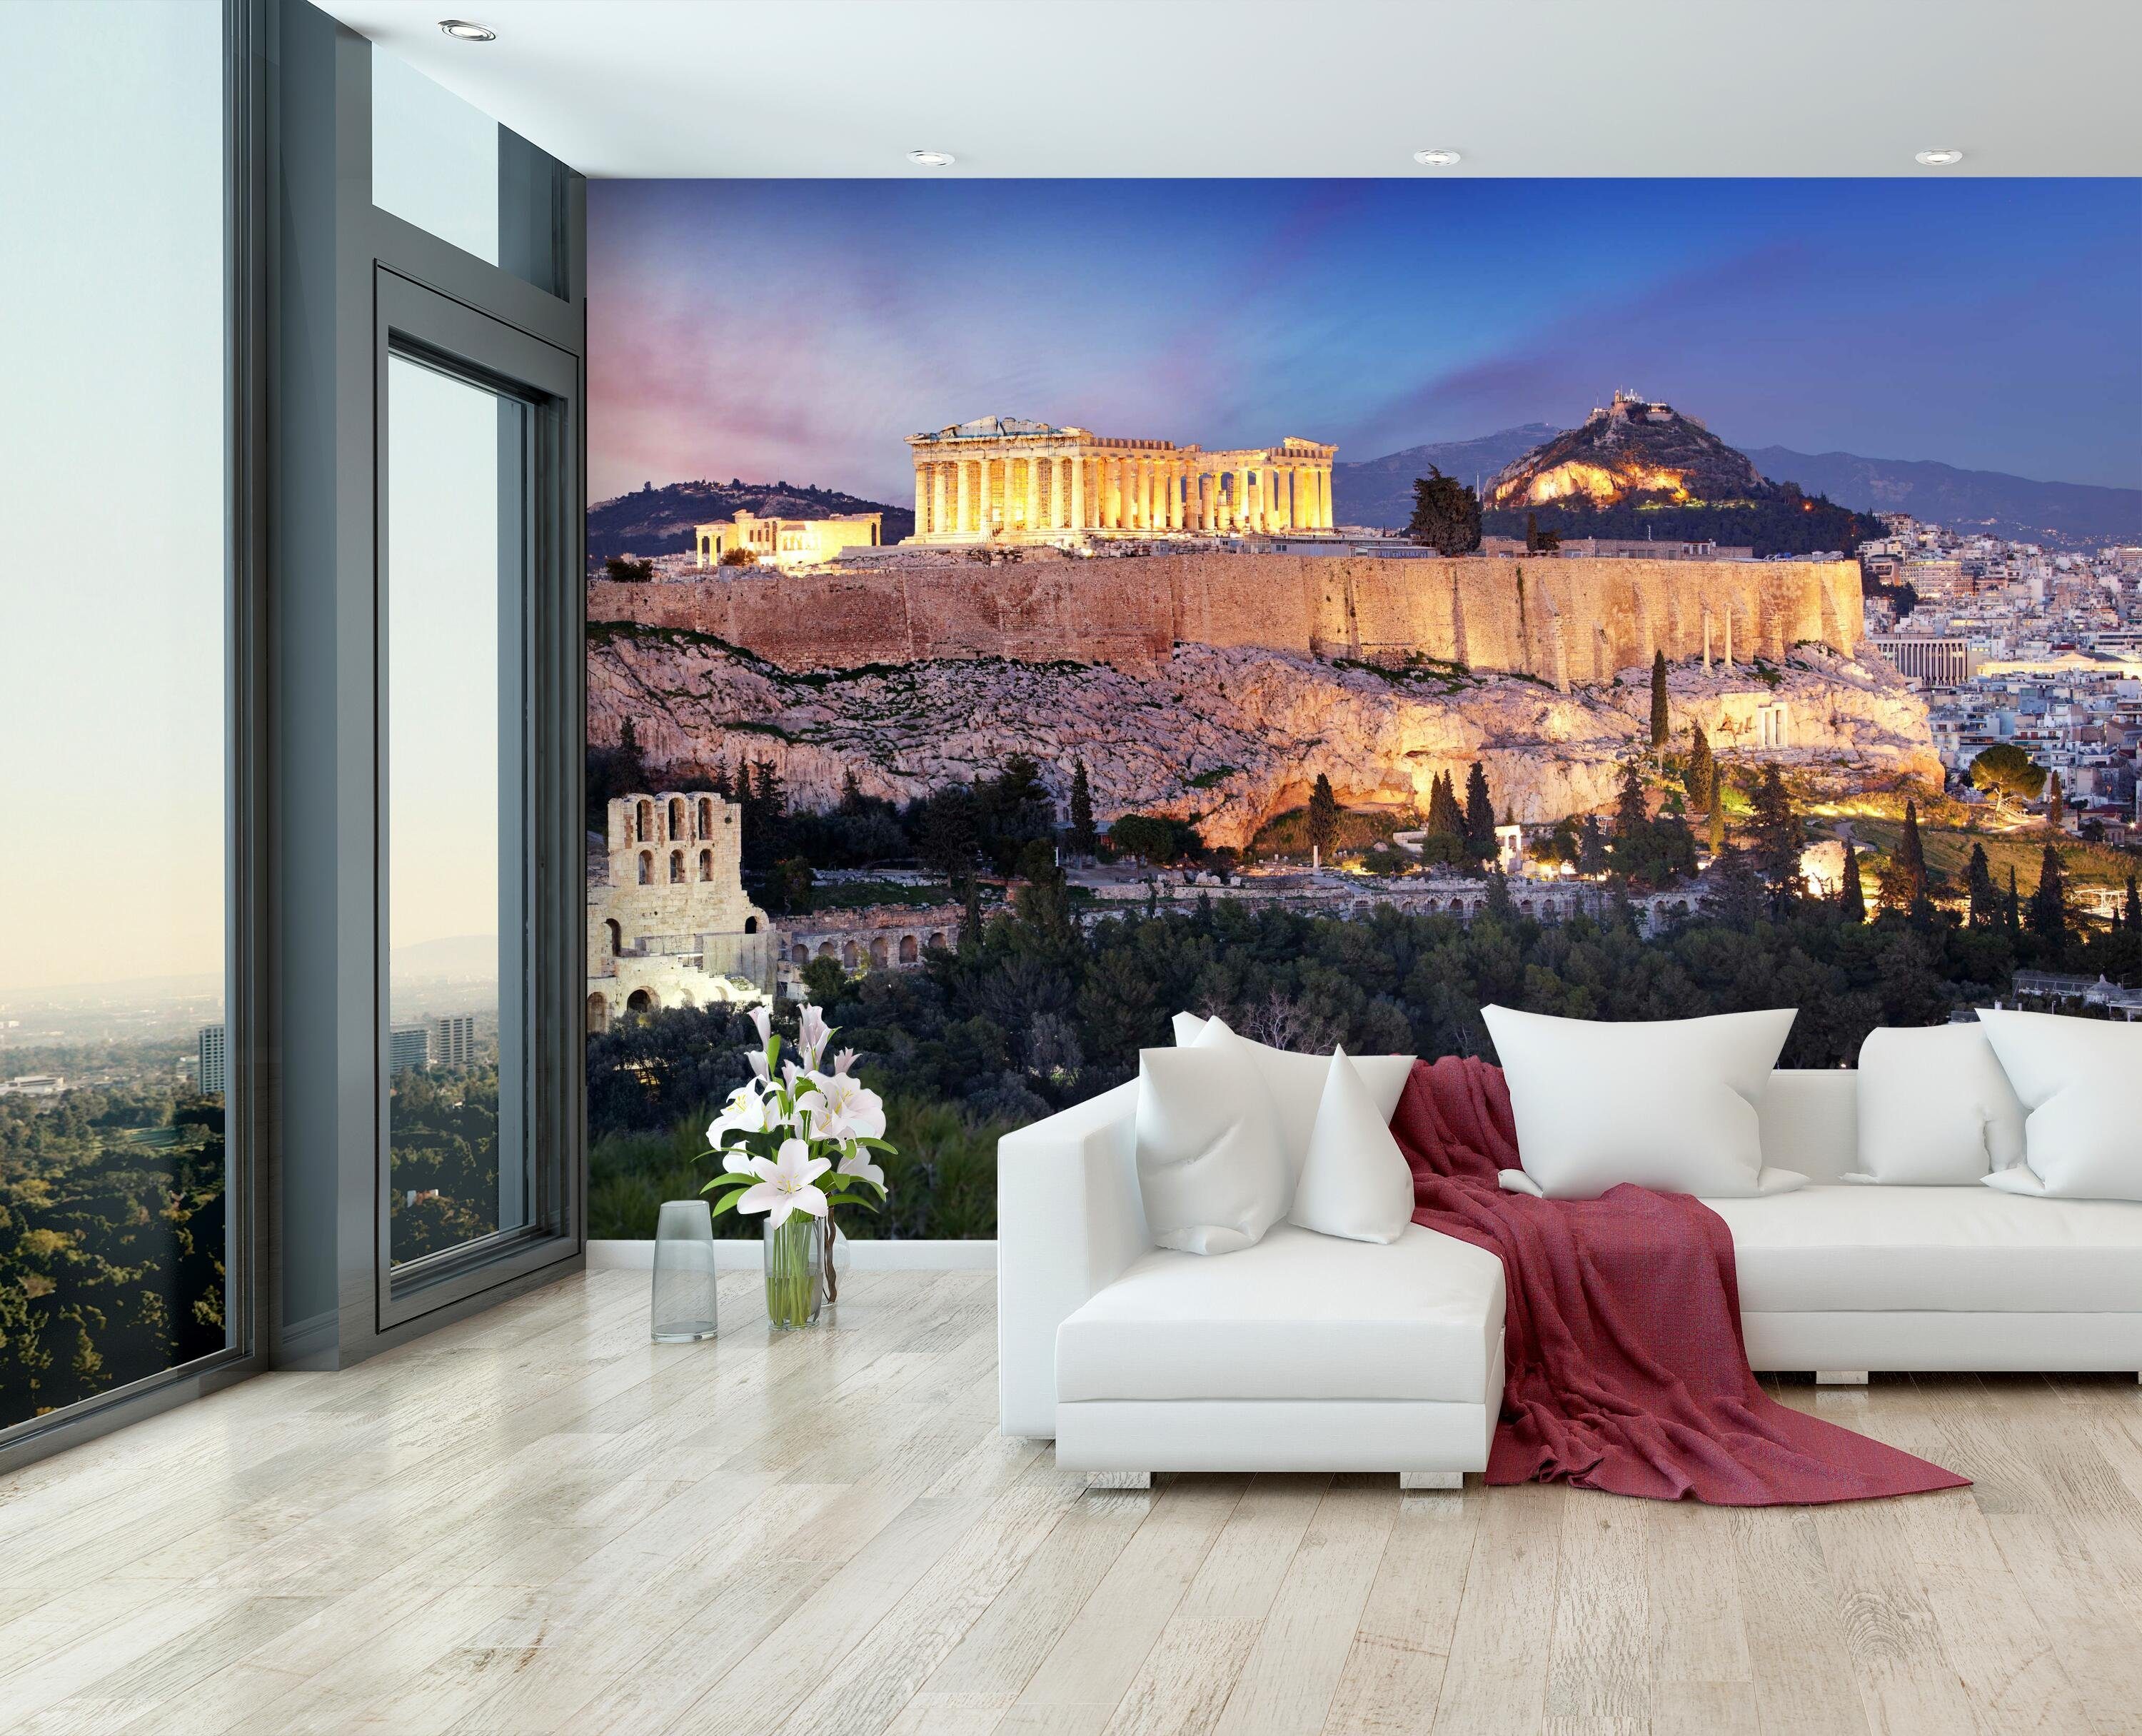 Wandtapete, Vliestapete Stil, glatt, matt, Gebäude im Motivtapete, wandmotiv24 Fototapete Griechischen